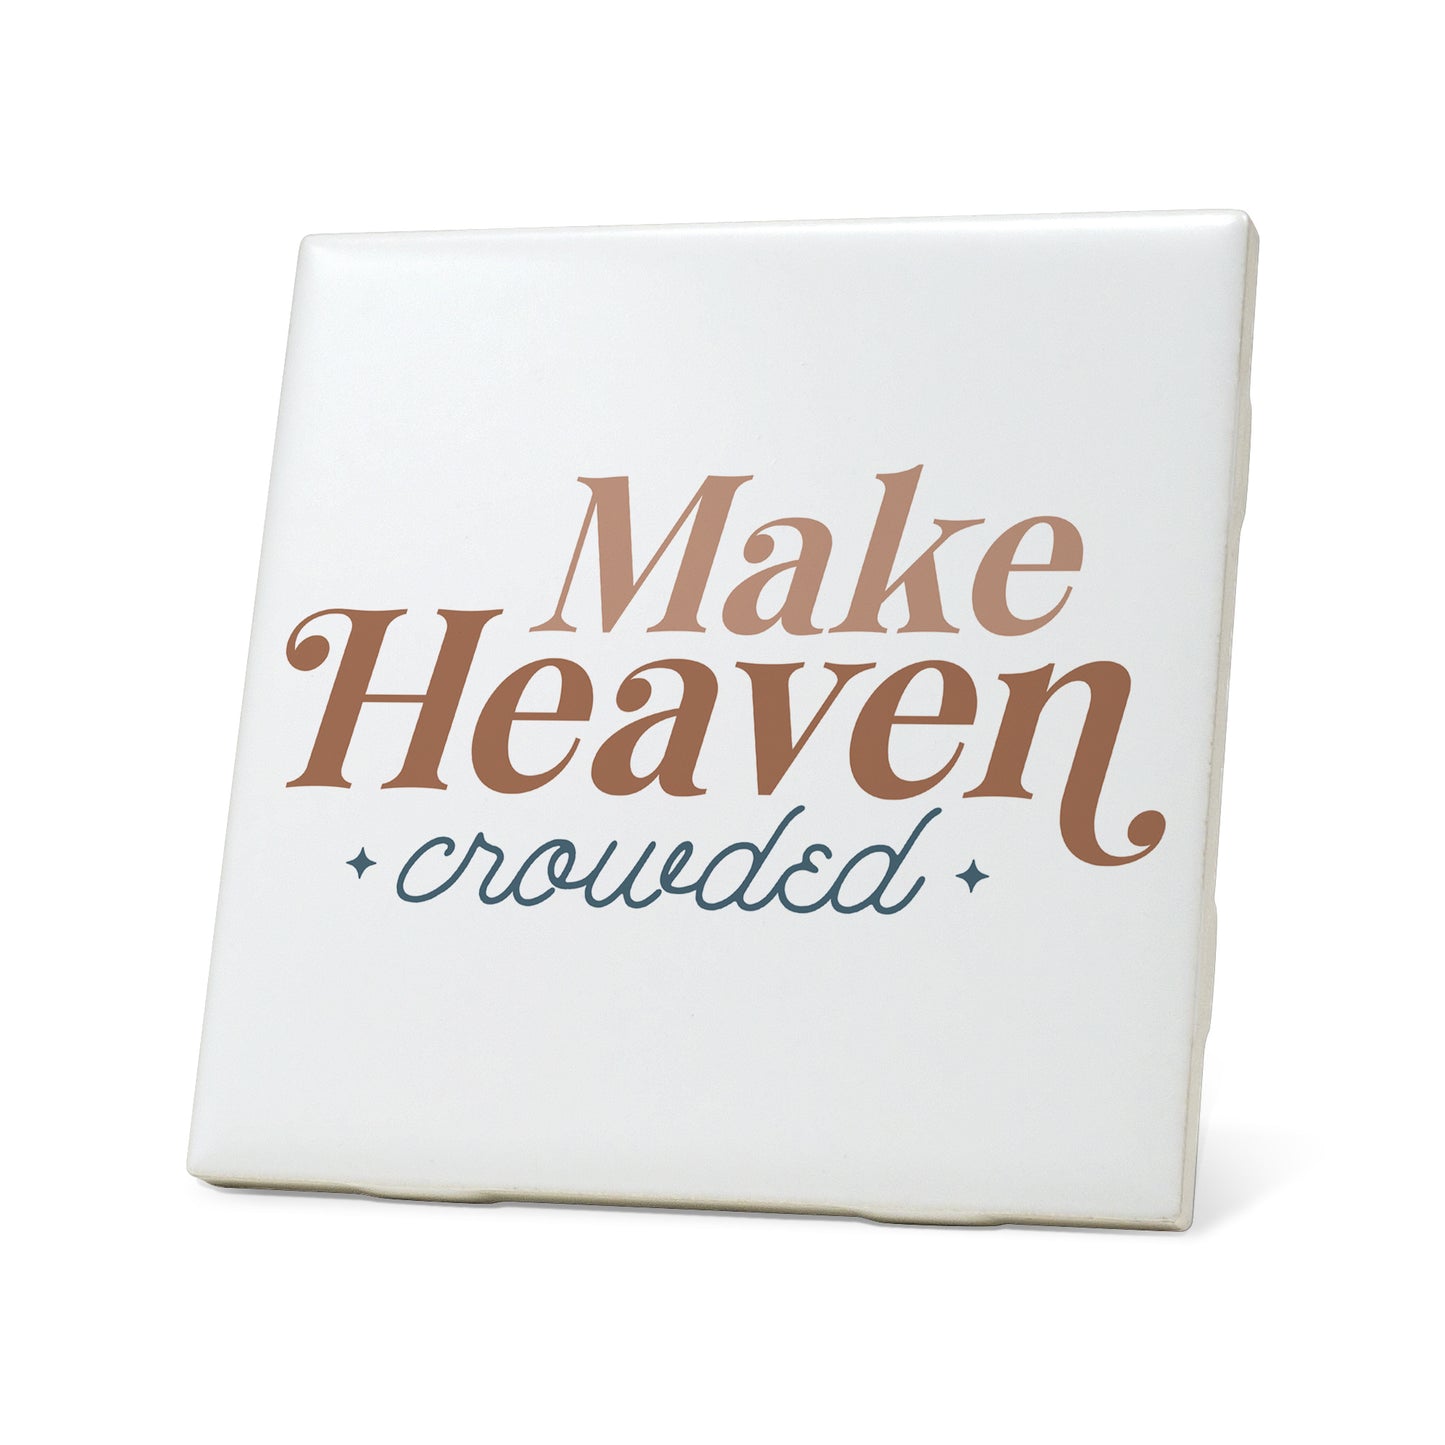 Make Heaven crowded Graphic Coasters